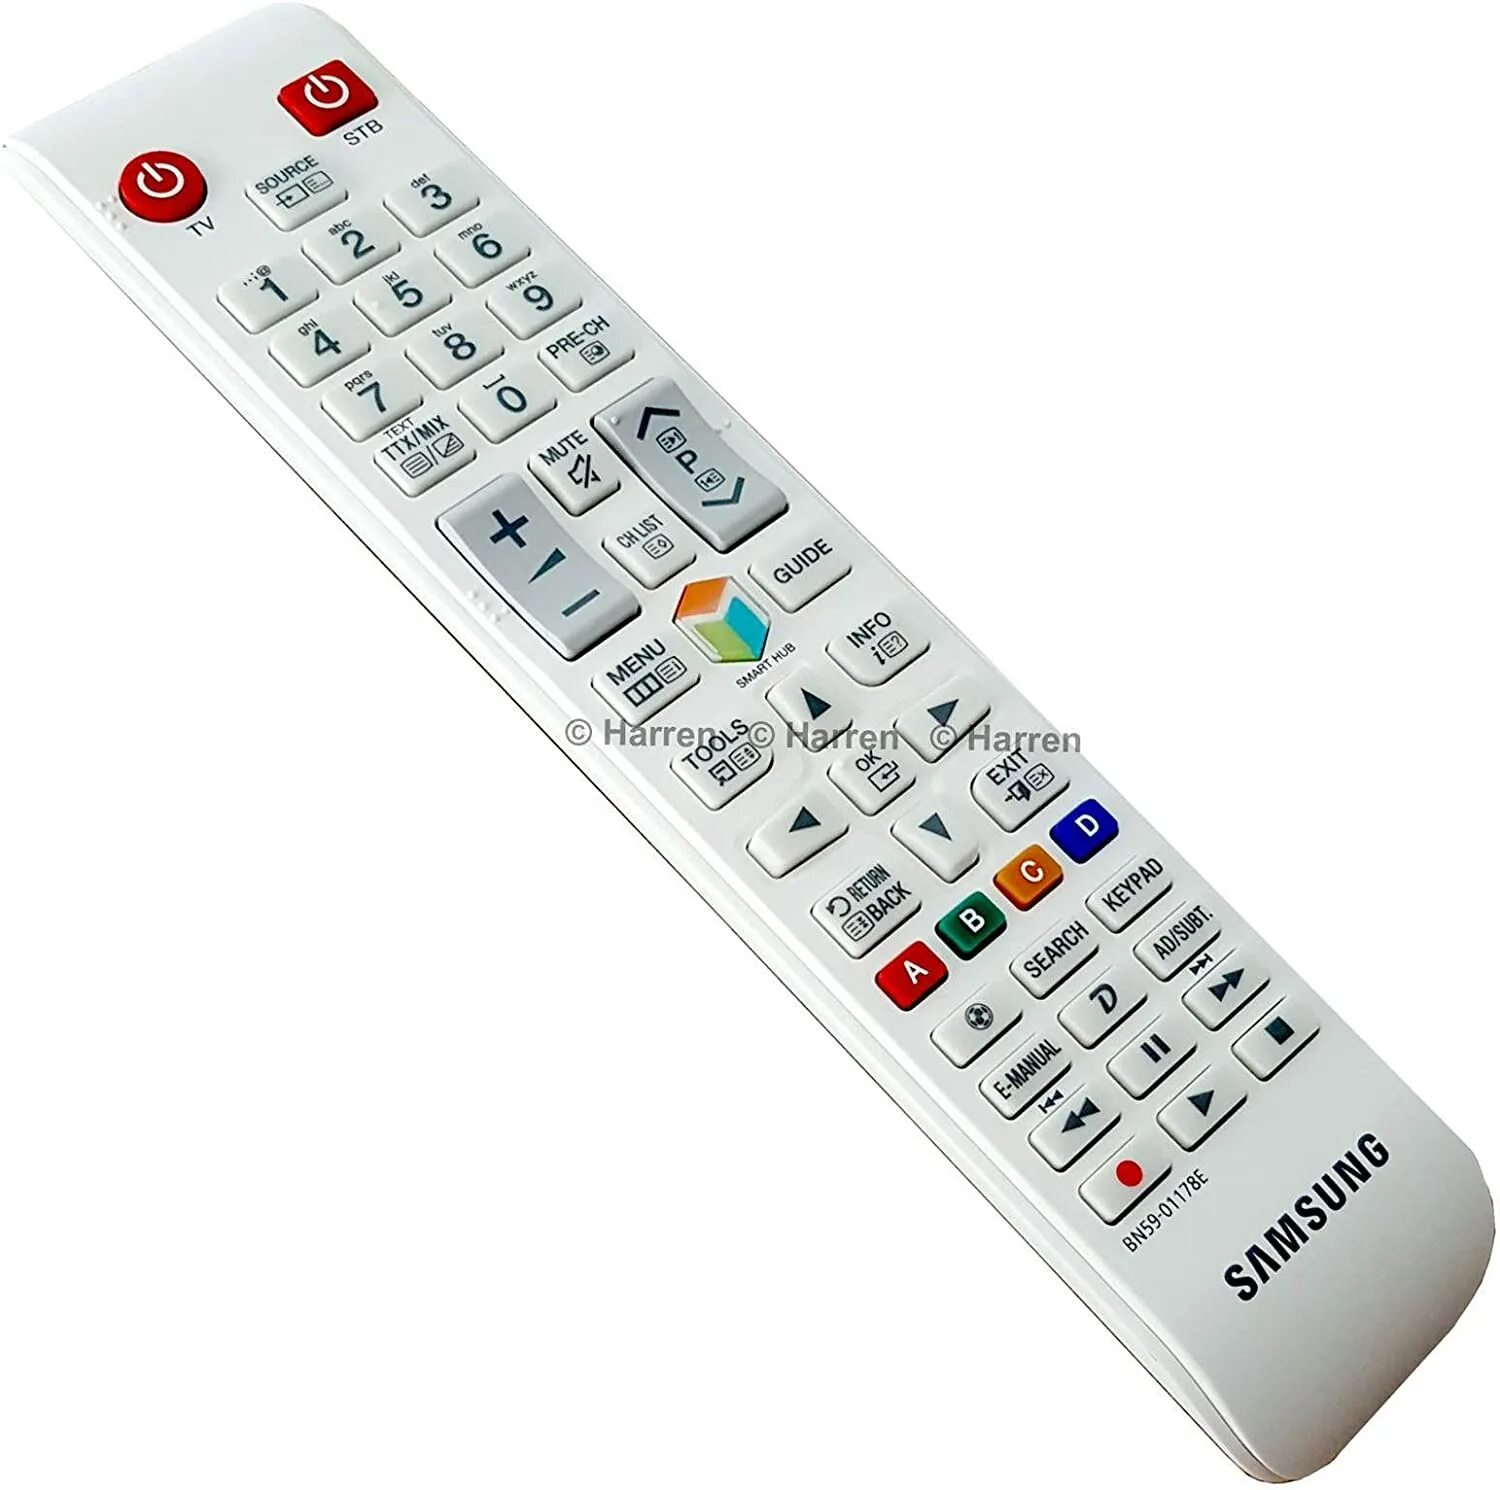 Включи интернет пульт. Bn59-01178b пульт. Пульт для телевизора Samsung bn59-01178b. Пульт Samsung bn59. Пульт Samsung Smart TV белый.